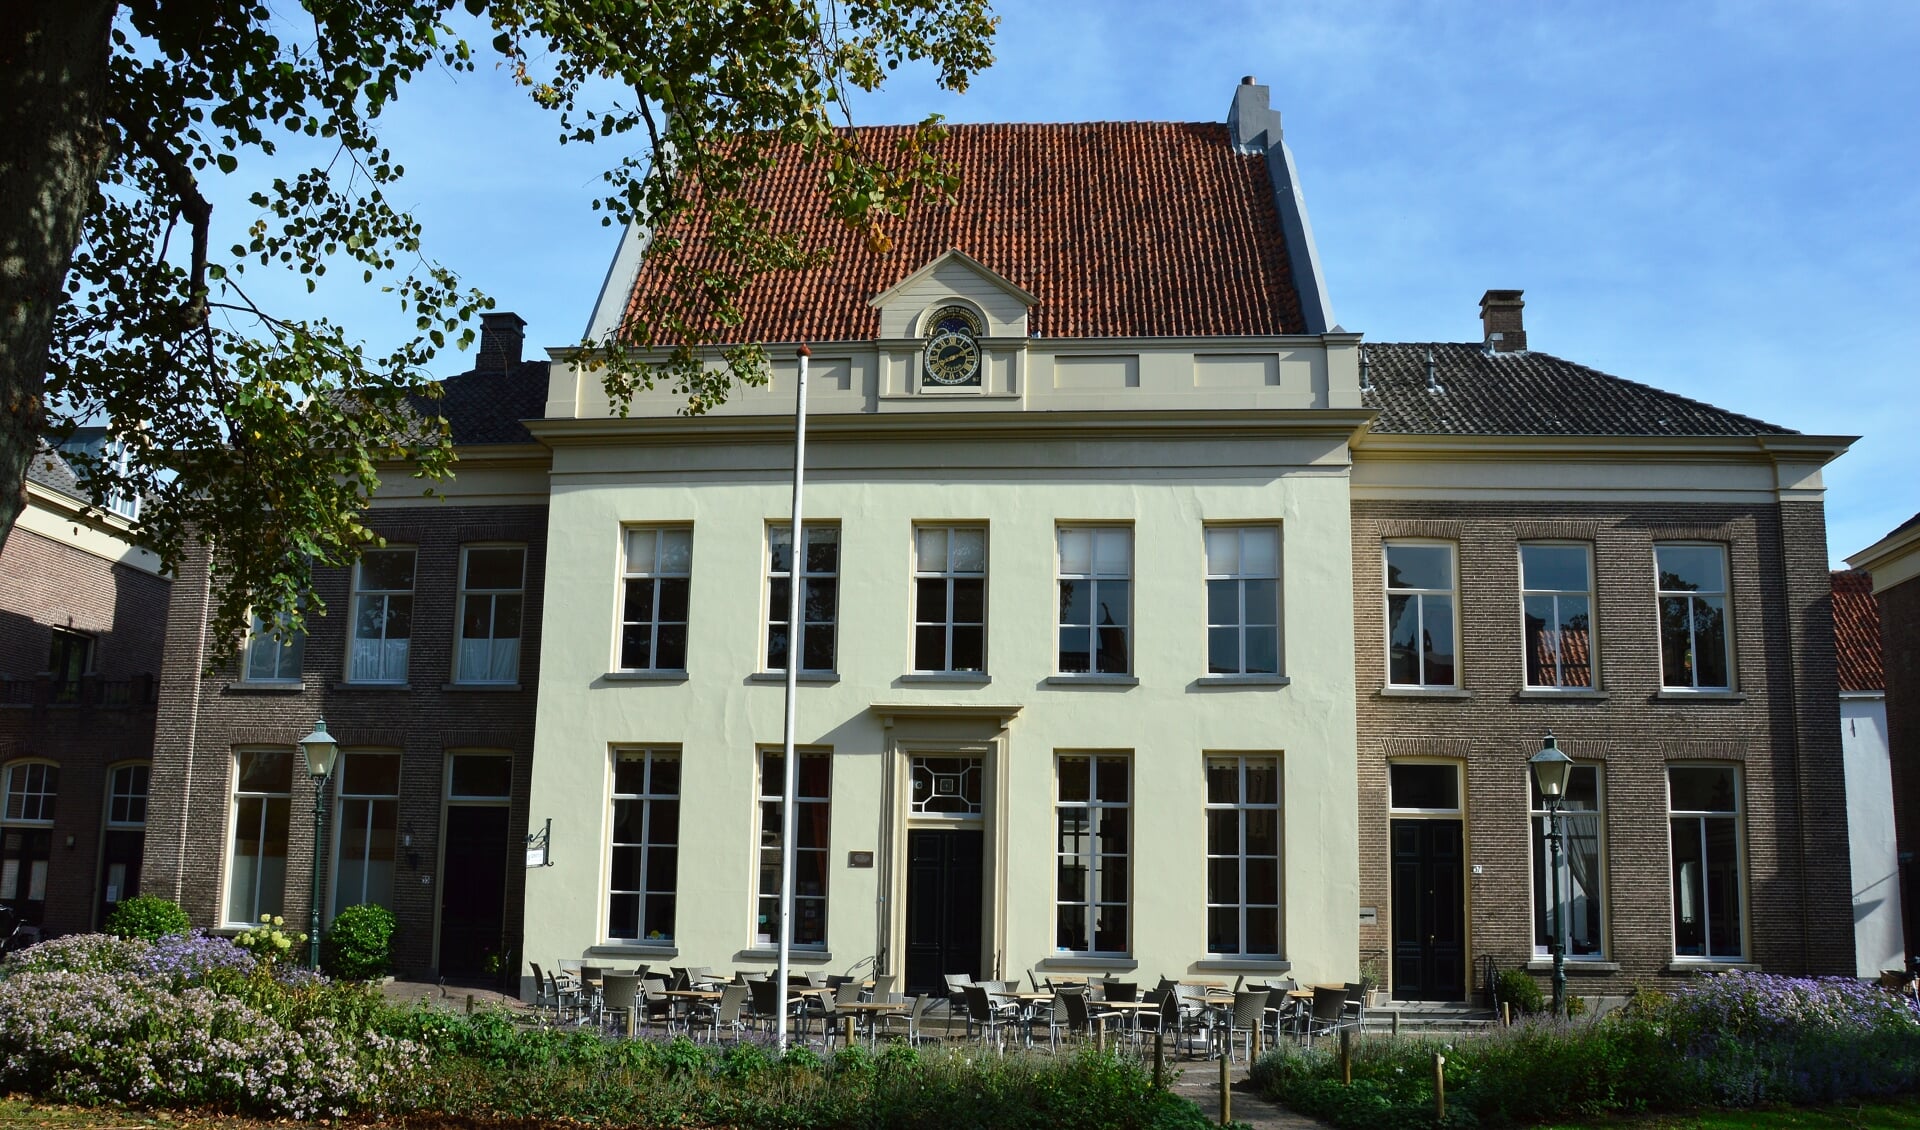 Huize Borro aan de Oude Bornhof 55-57 in Zutphen. Foto: Alize Hillebrink